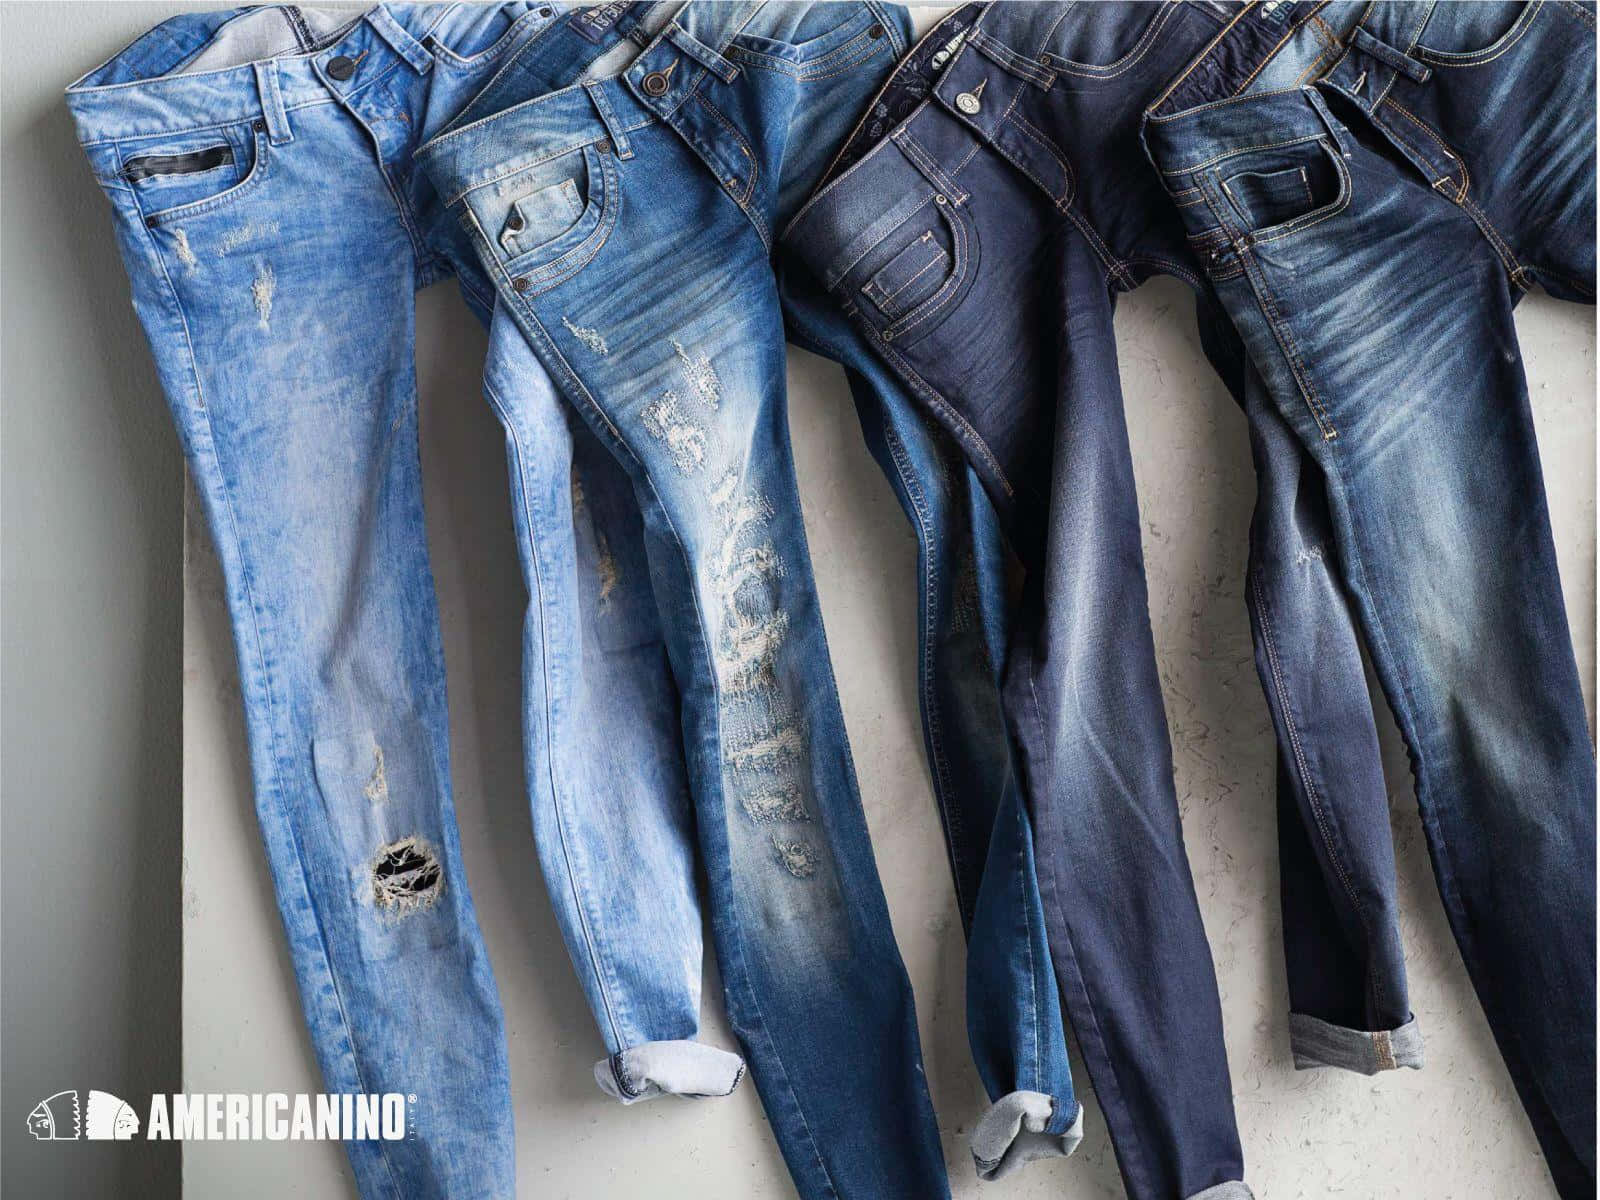 Unosguardo Ravvicinato Ai Jeans Colorati